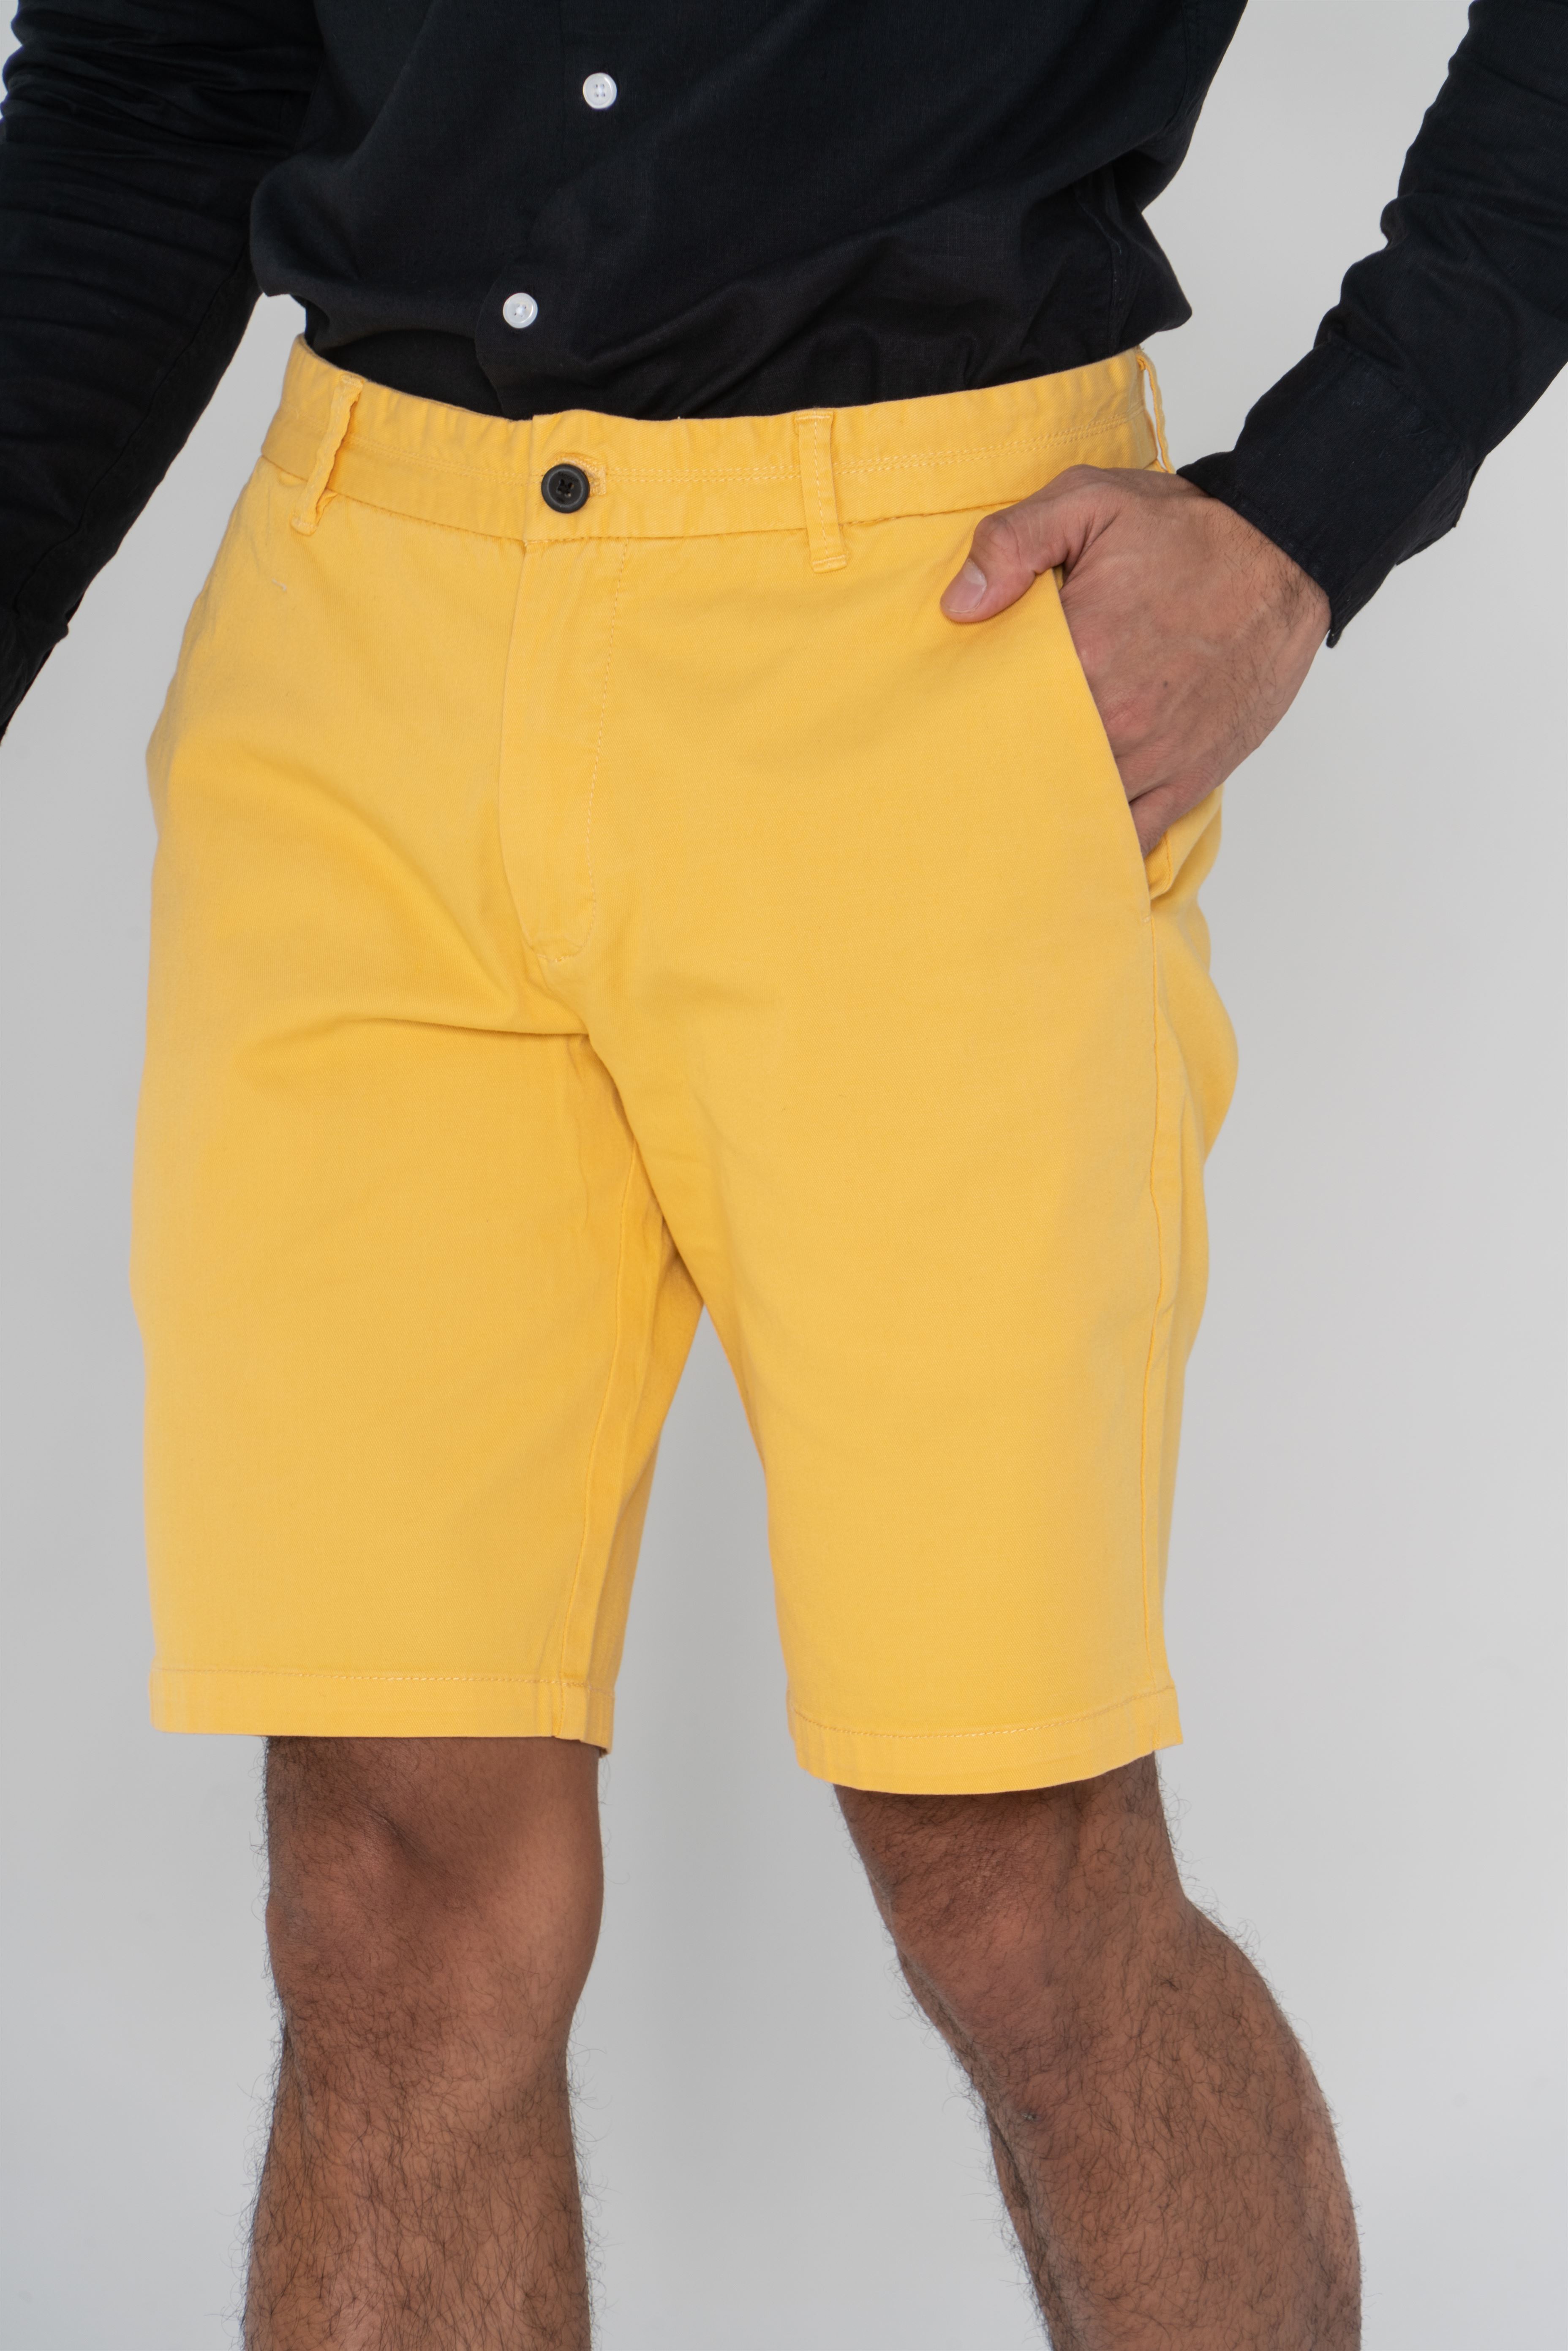 Bermuda Yellow Casual Man